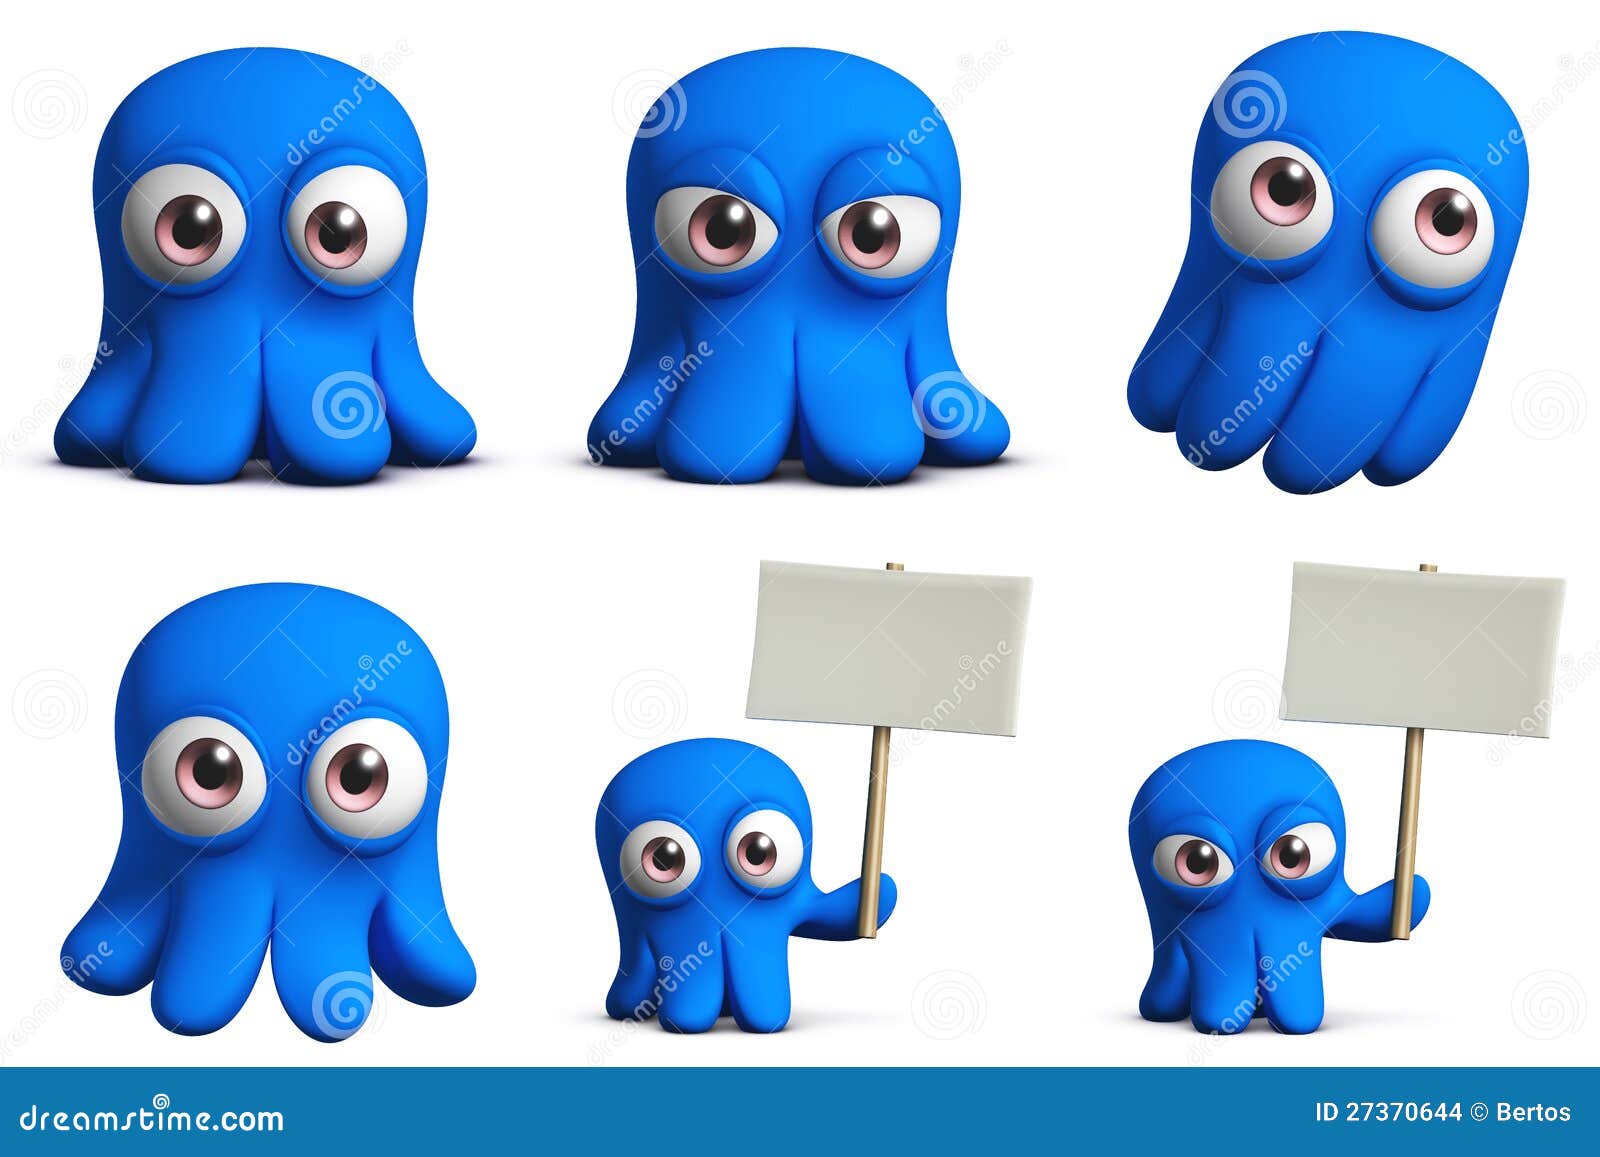 Cartoon octopus stock illustration. Illustration of octopus - 27370644